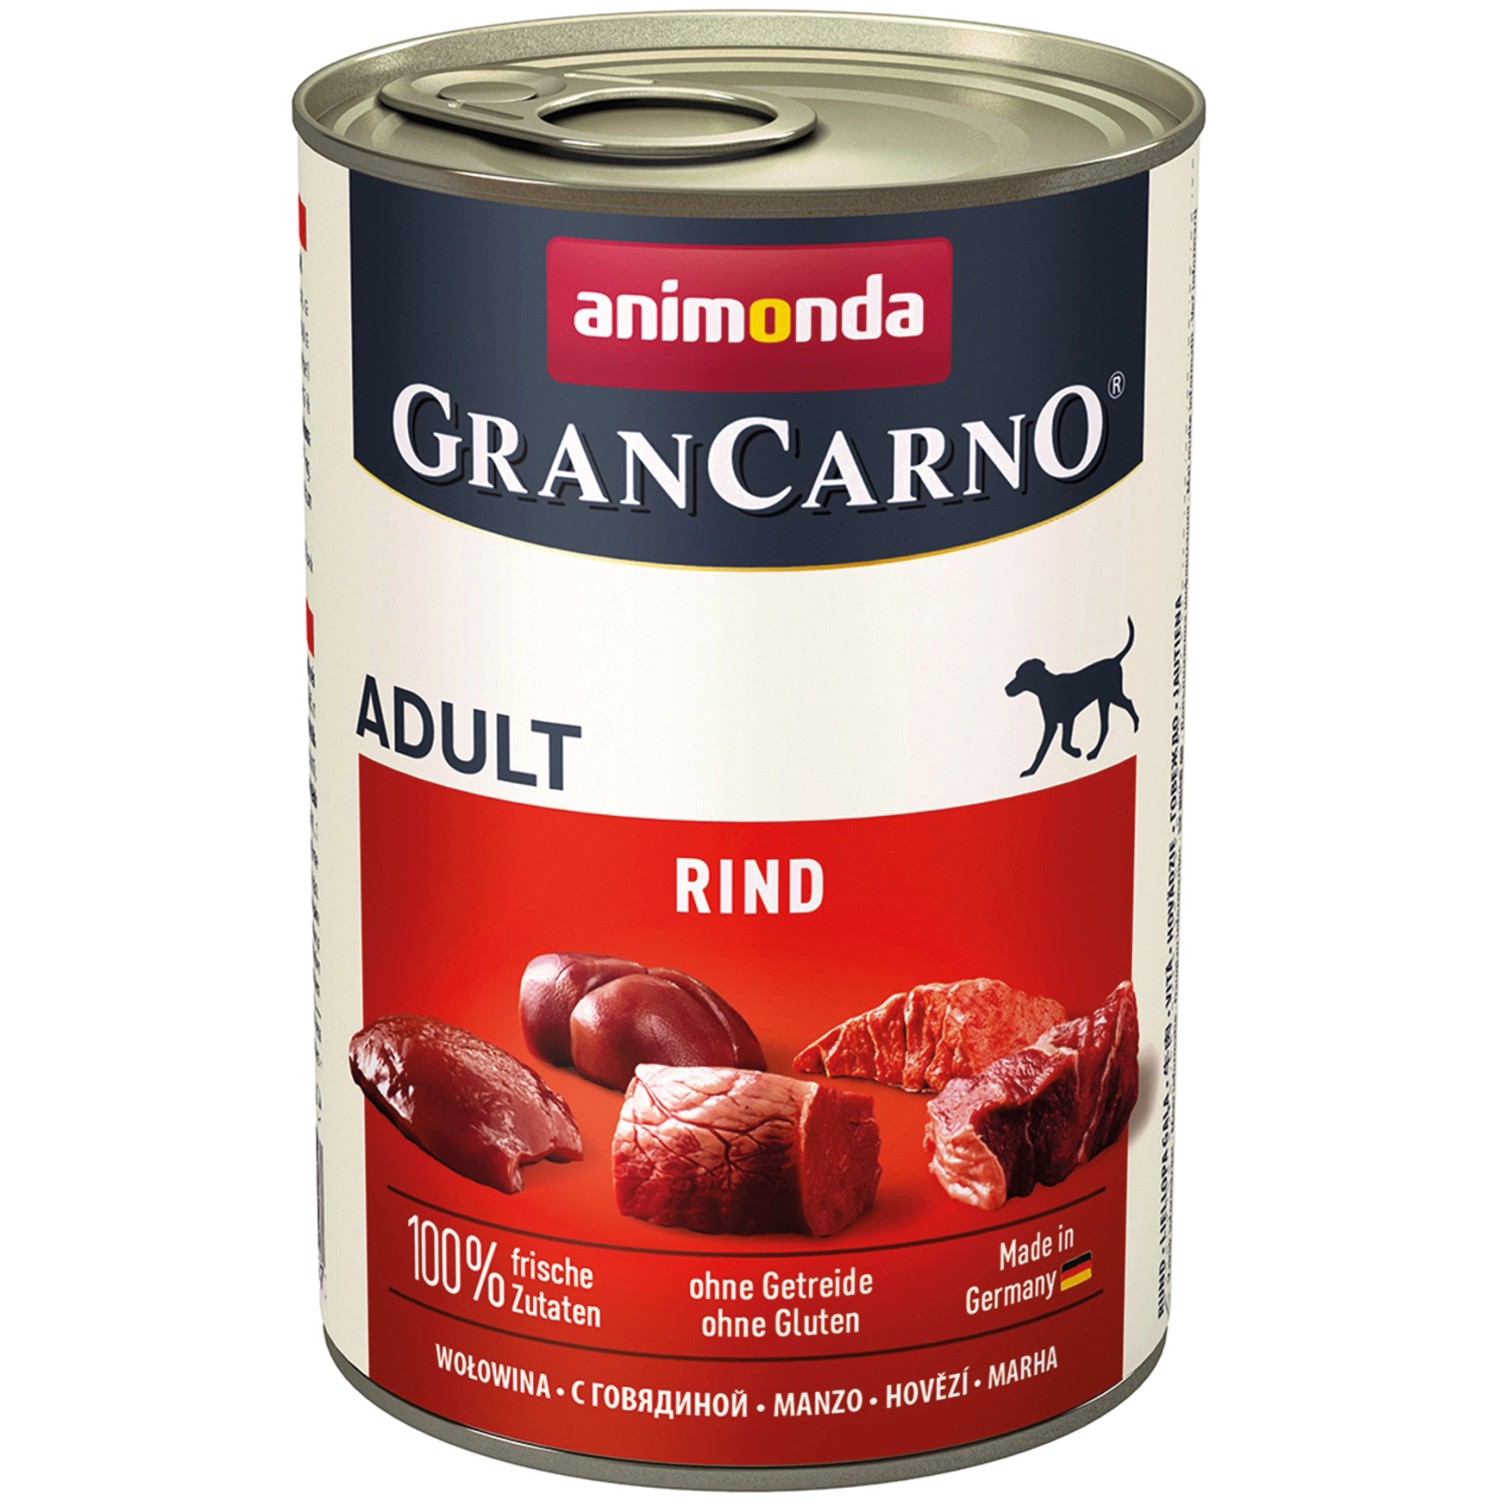 Gran Carno Adult Rind 400 g